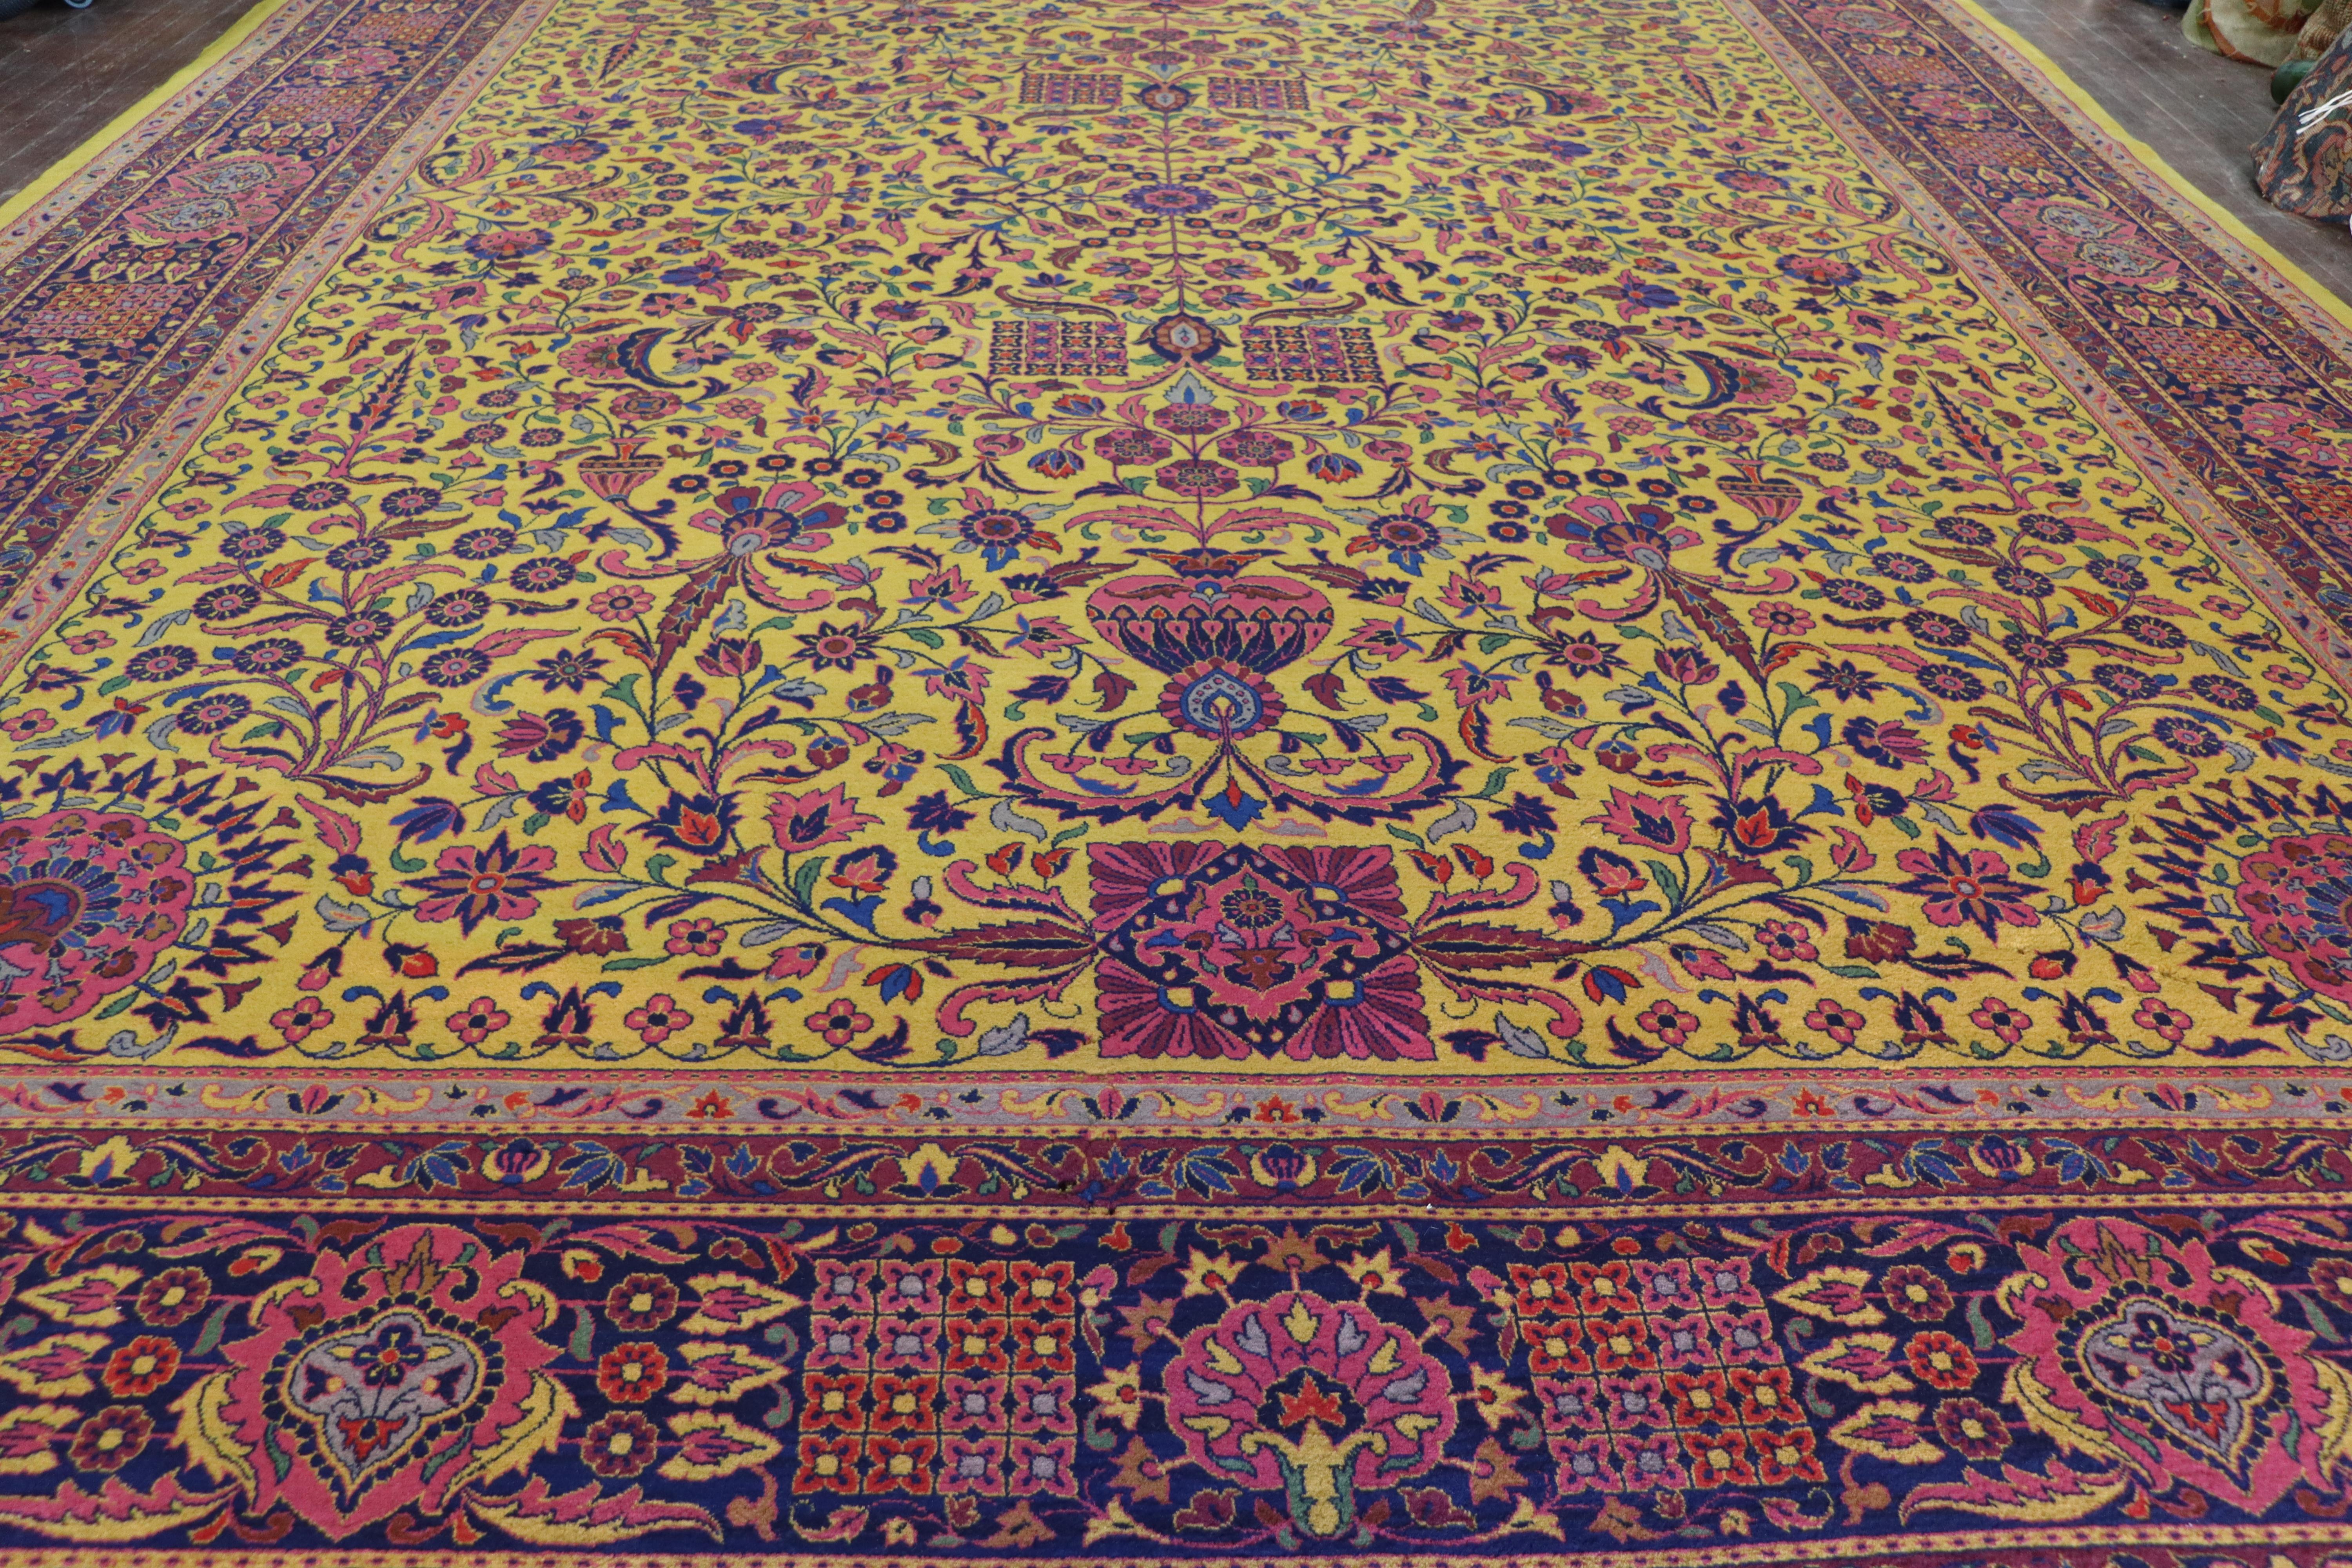 Antique Golden Manchester Kashan Carpet, The Finest, 10' x 14' For Sale 1